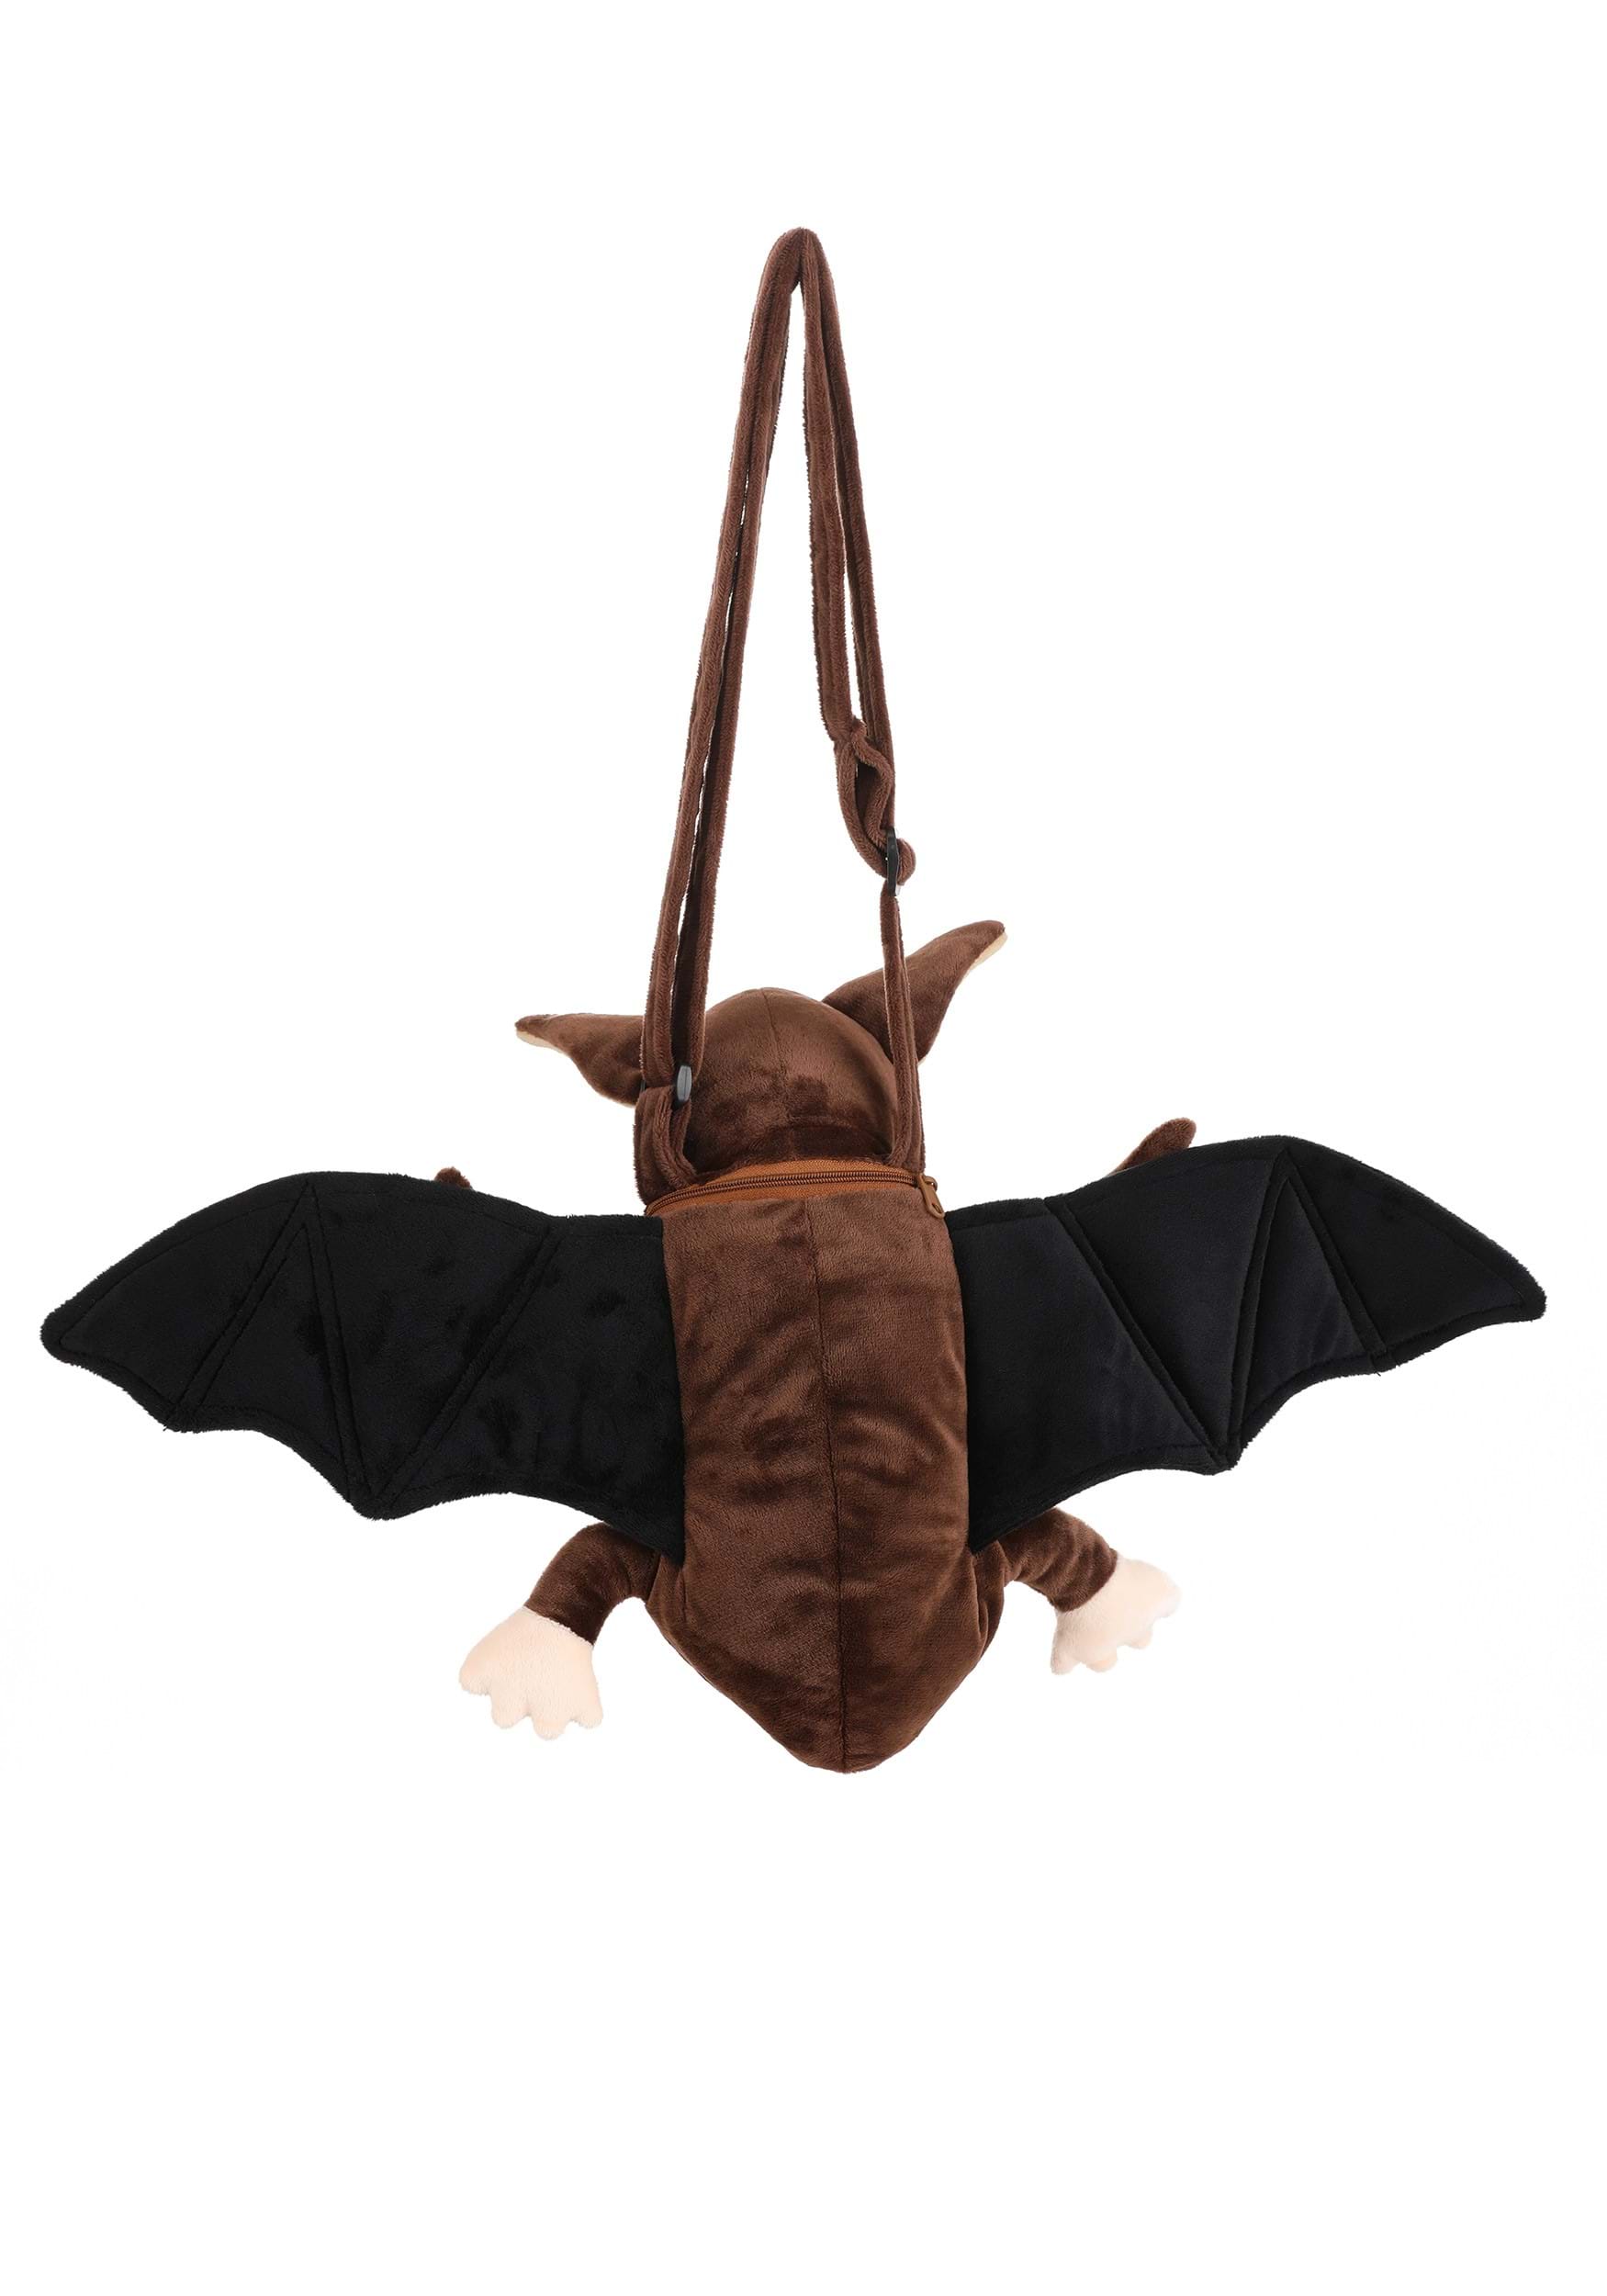 Bat Fancy Dress Costume Companion Purse